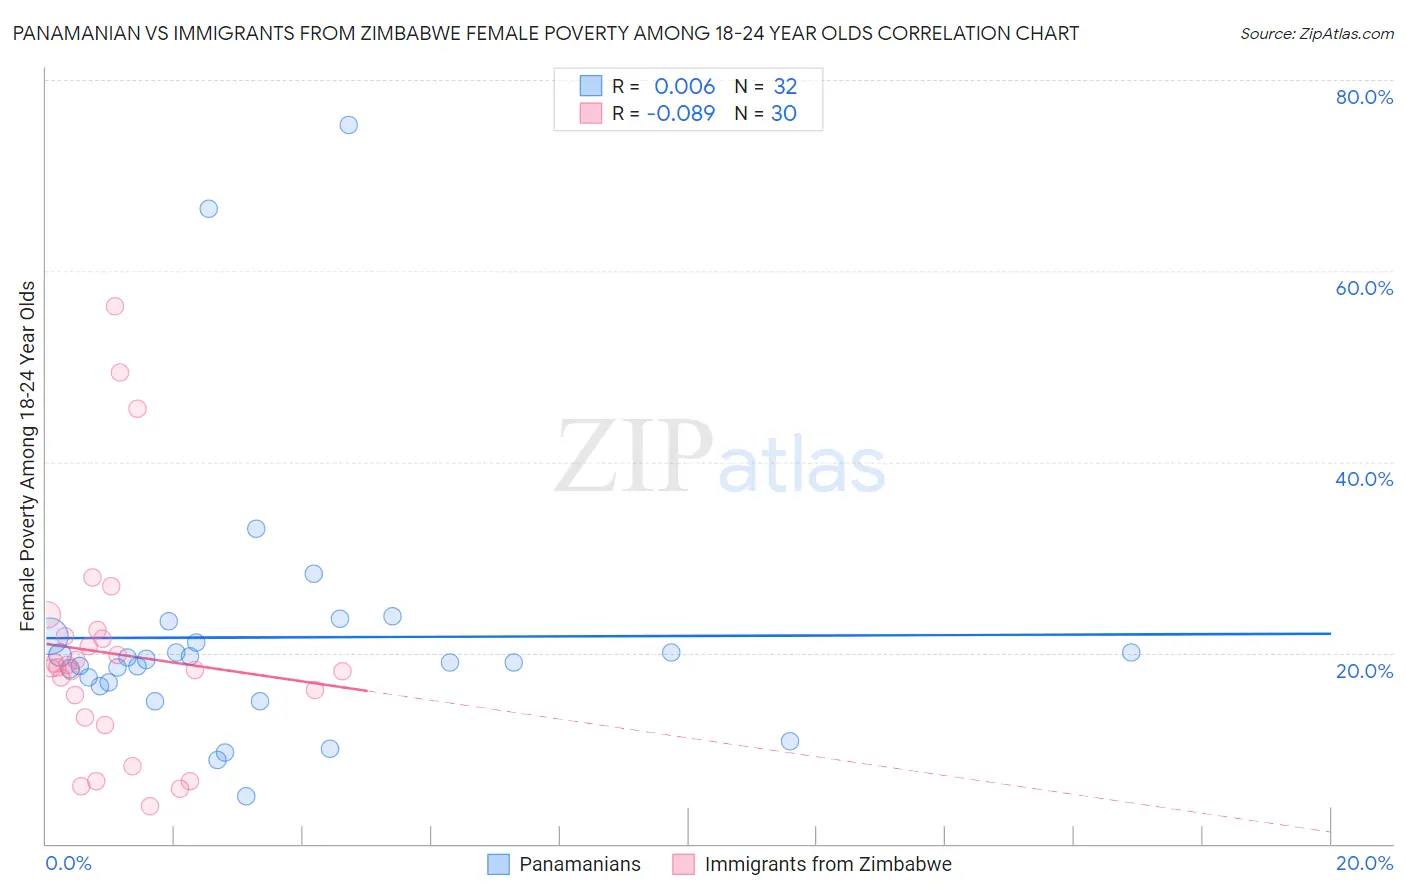 Panamanian vs Immigrants from Zimbabwe Female Poverty Among 18-24 Year Olds